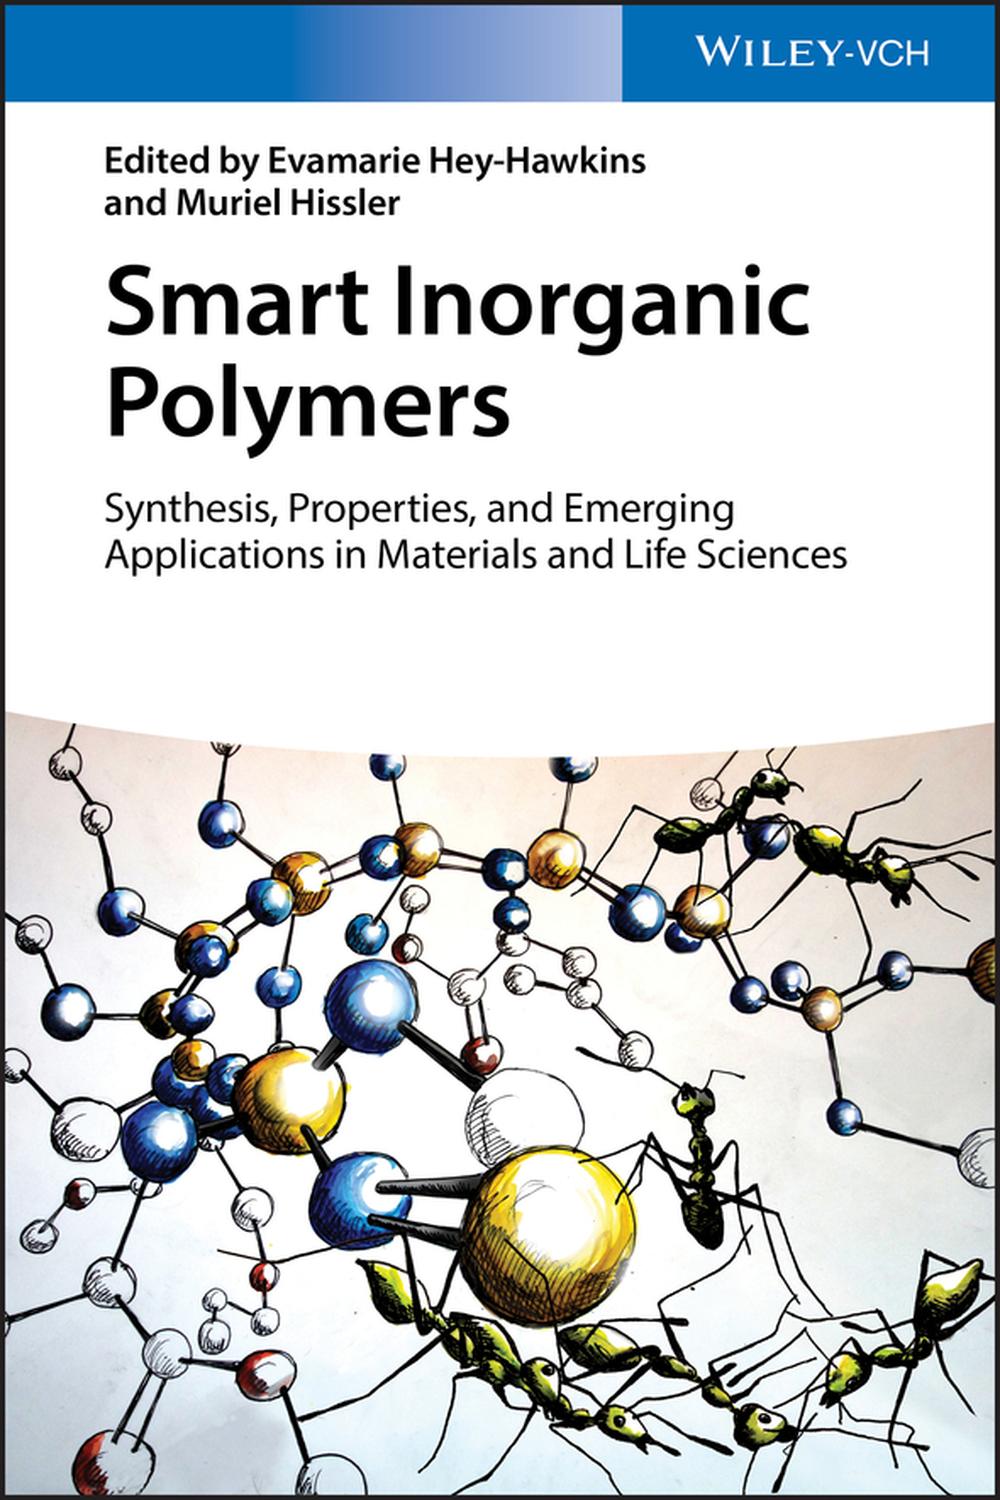 PDF] Smart Inorganic Polymers by Evamarie Hey-Hawkins eBook | Perlego